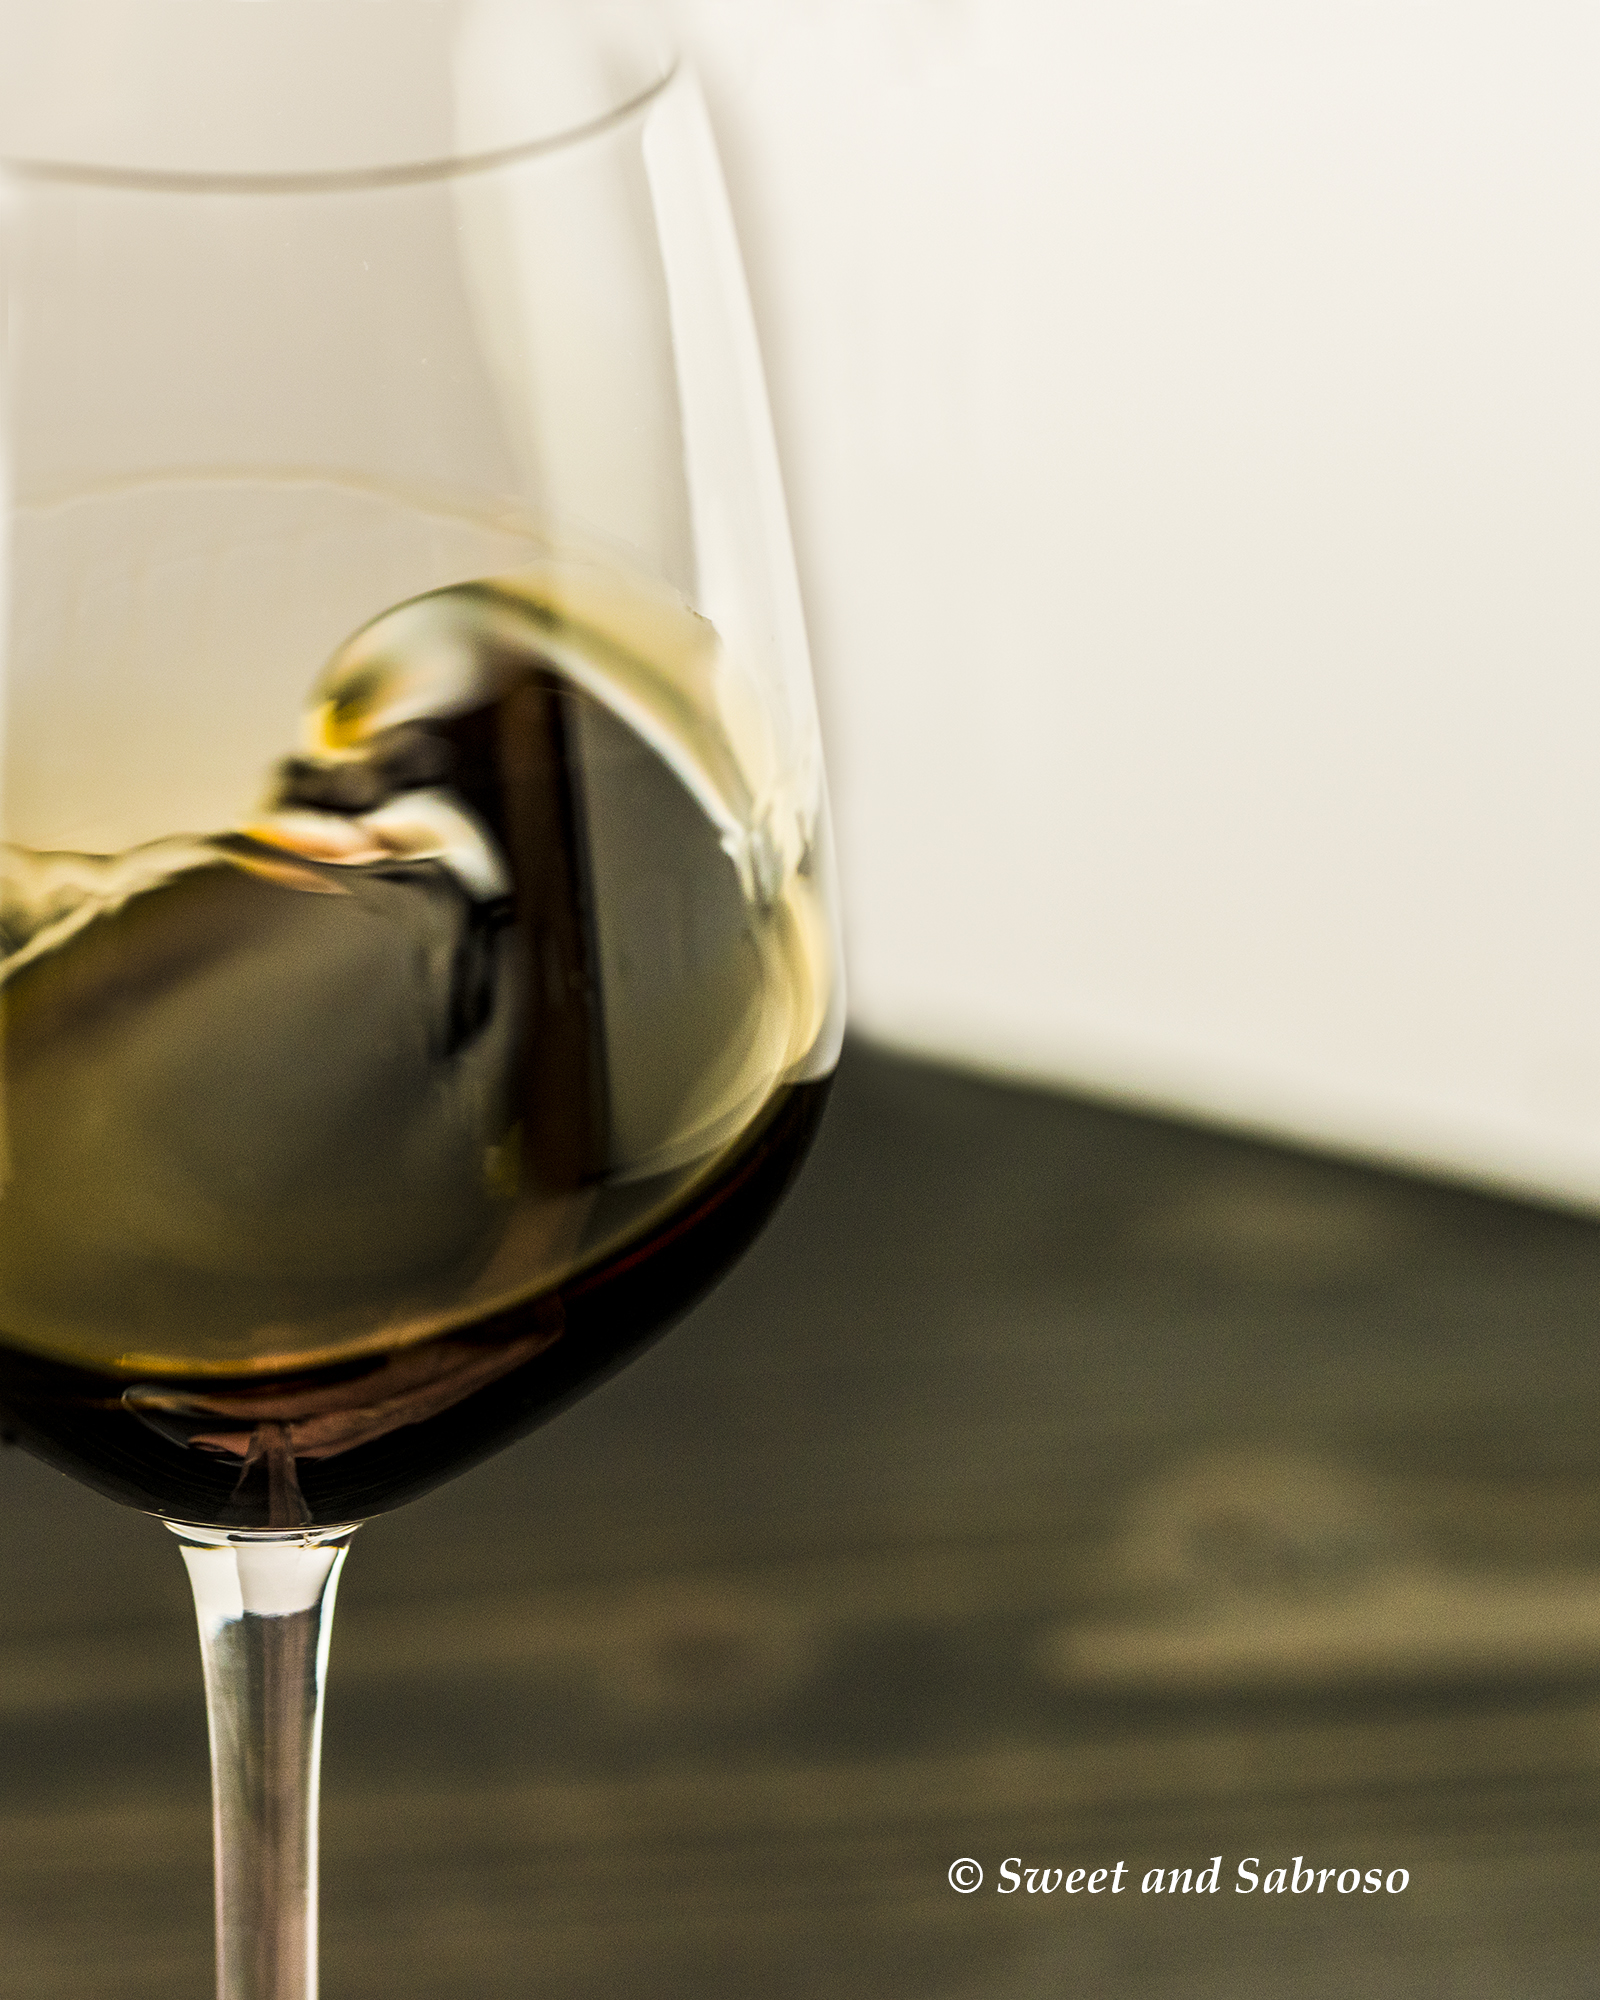 Pedro-Ximenex-PX-Sherry-Wine-Swirling-Wine-In-Glass